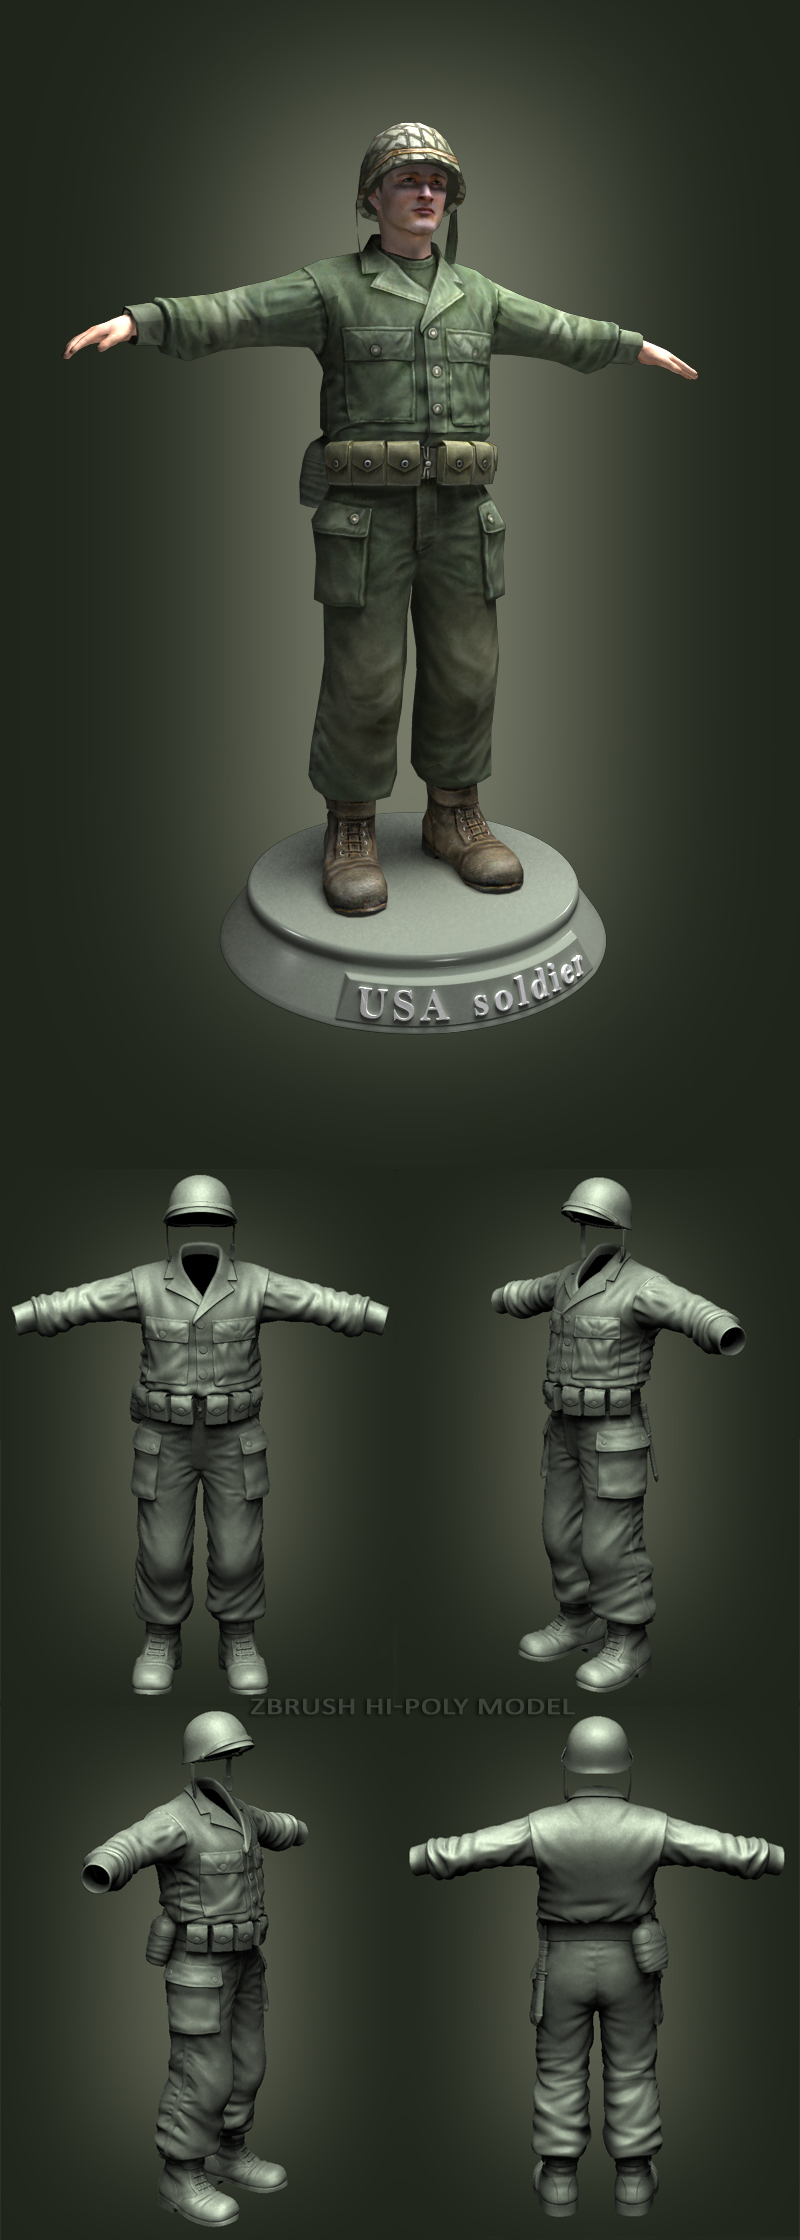 USA soldier